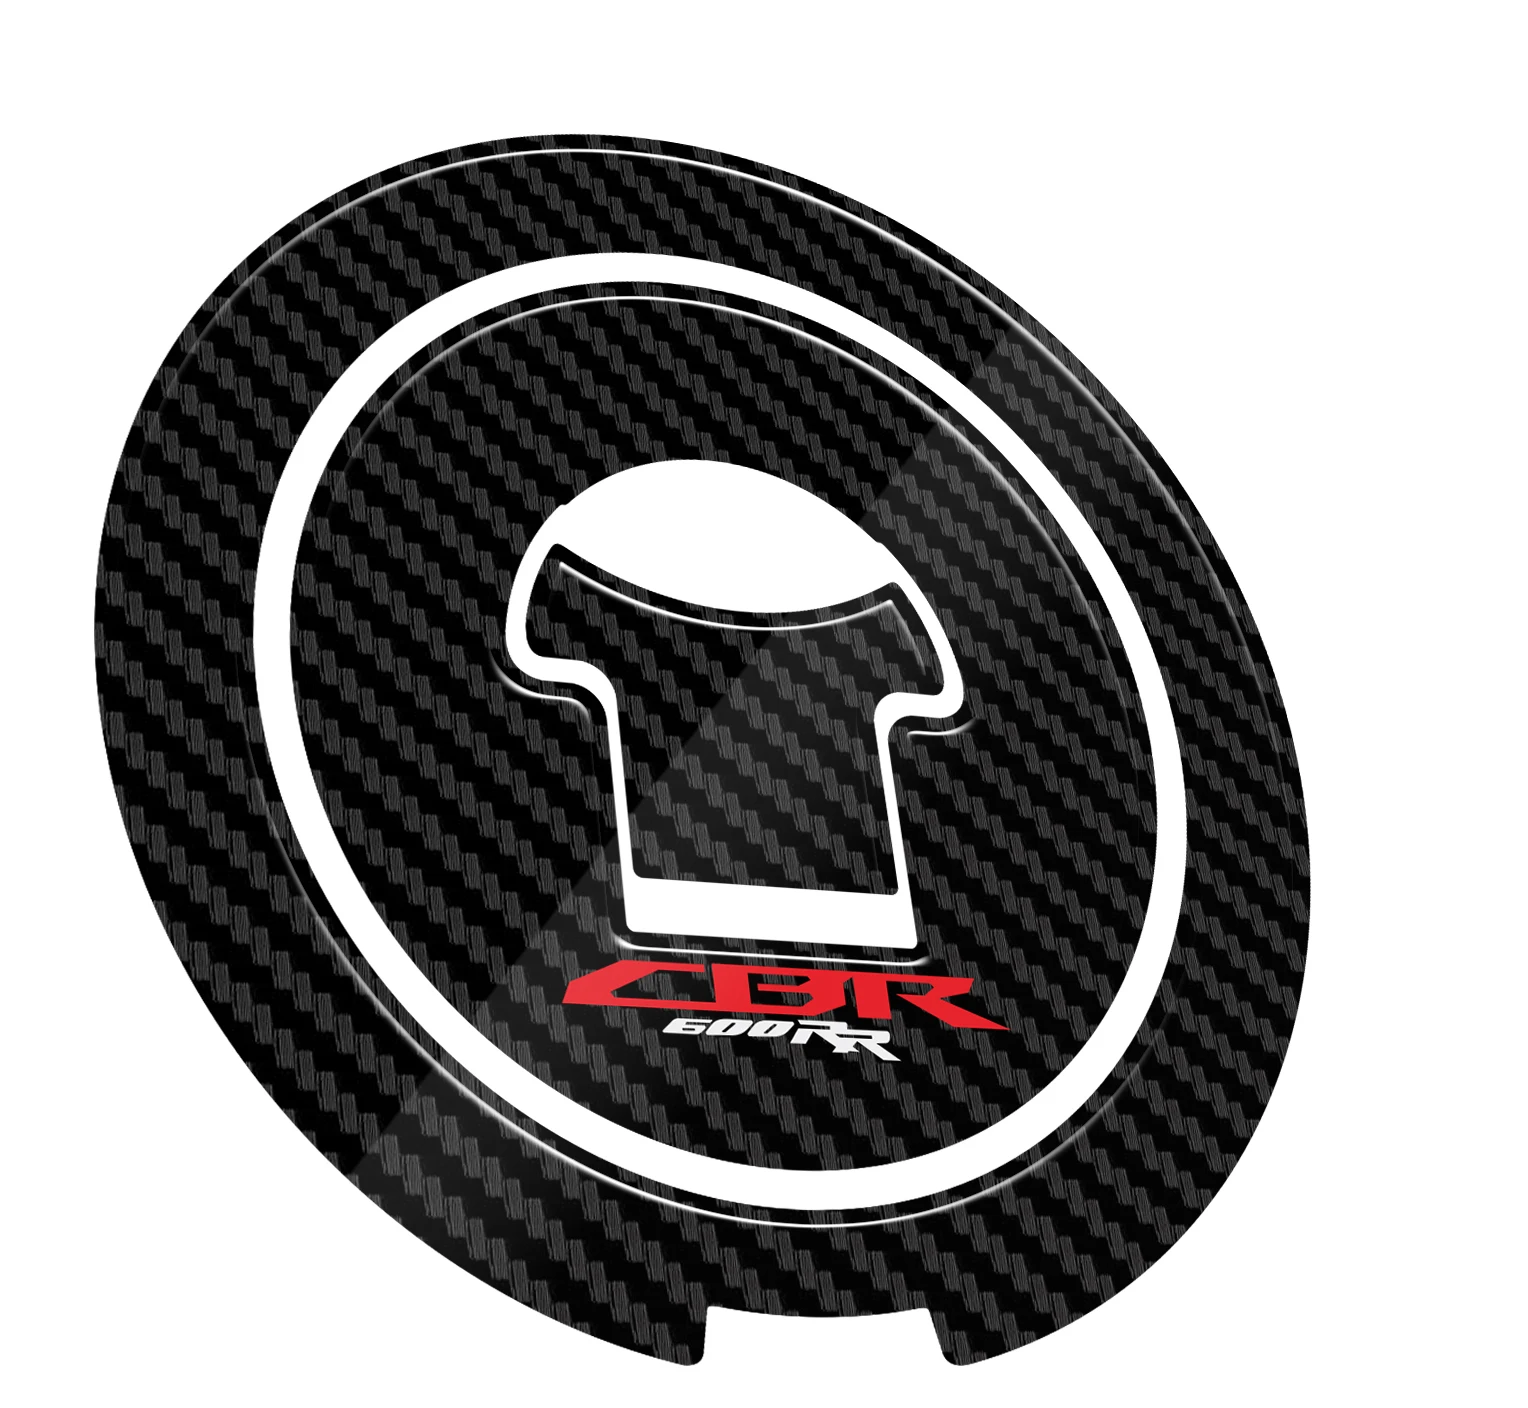 3D Carbon-look Motorcycle Fuel Gas Cap Protector Decals For HONDA CBR600 CBR600RR CBR 600RR 2003-2016 2004 2005 2007 2009 2008 коврики eva skyway honda accord 2003 2008 s01705166